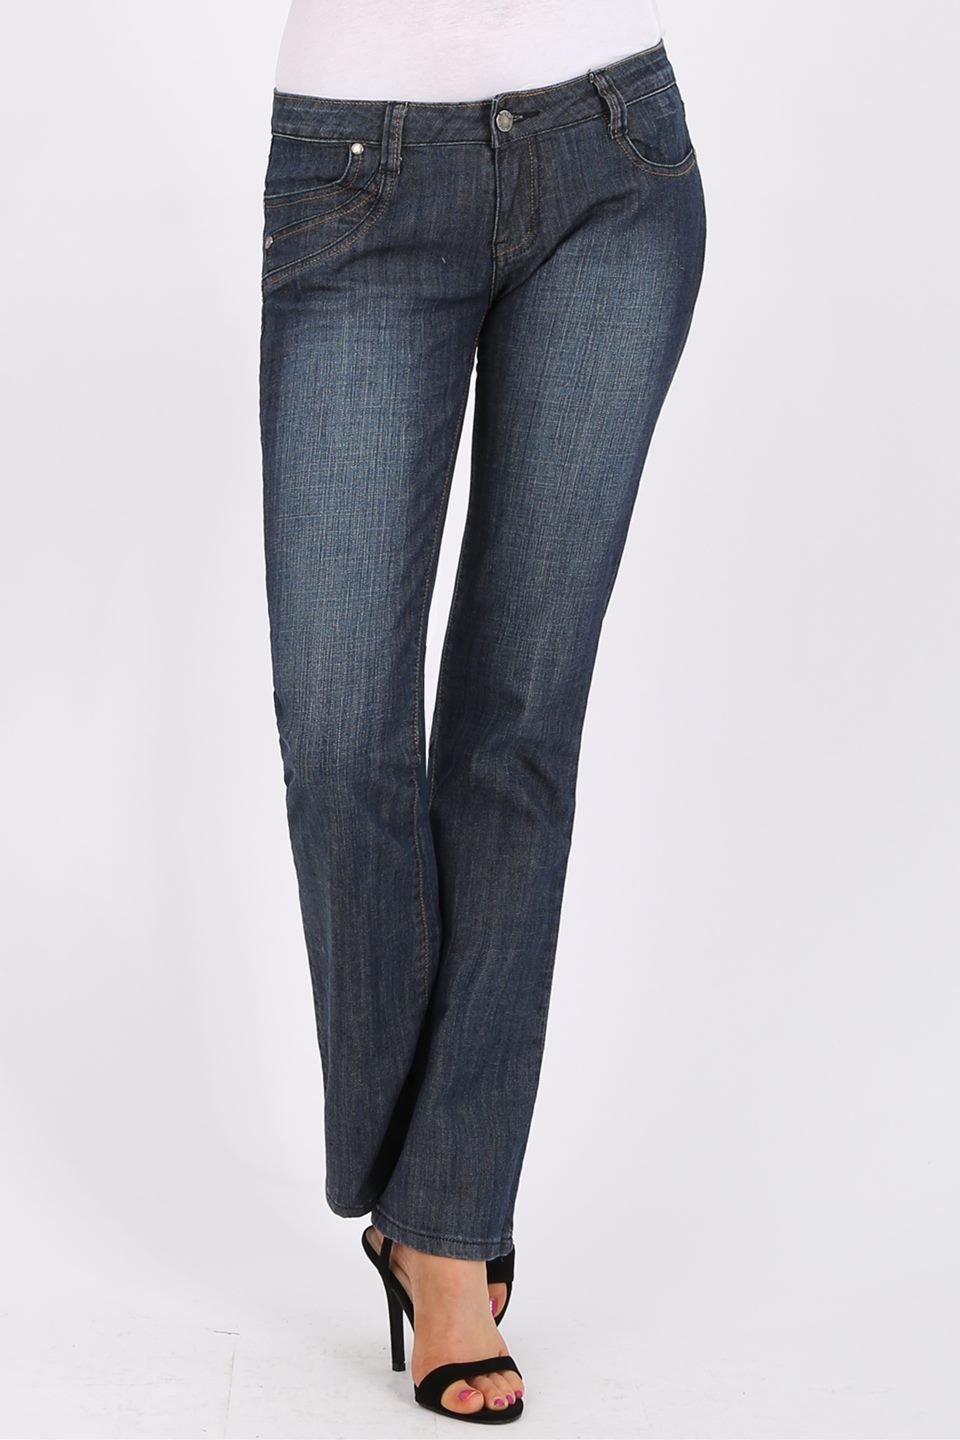 MISS PINKI Celine bootlegs Jeans in blue